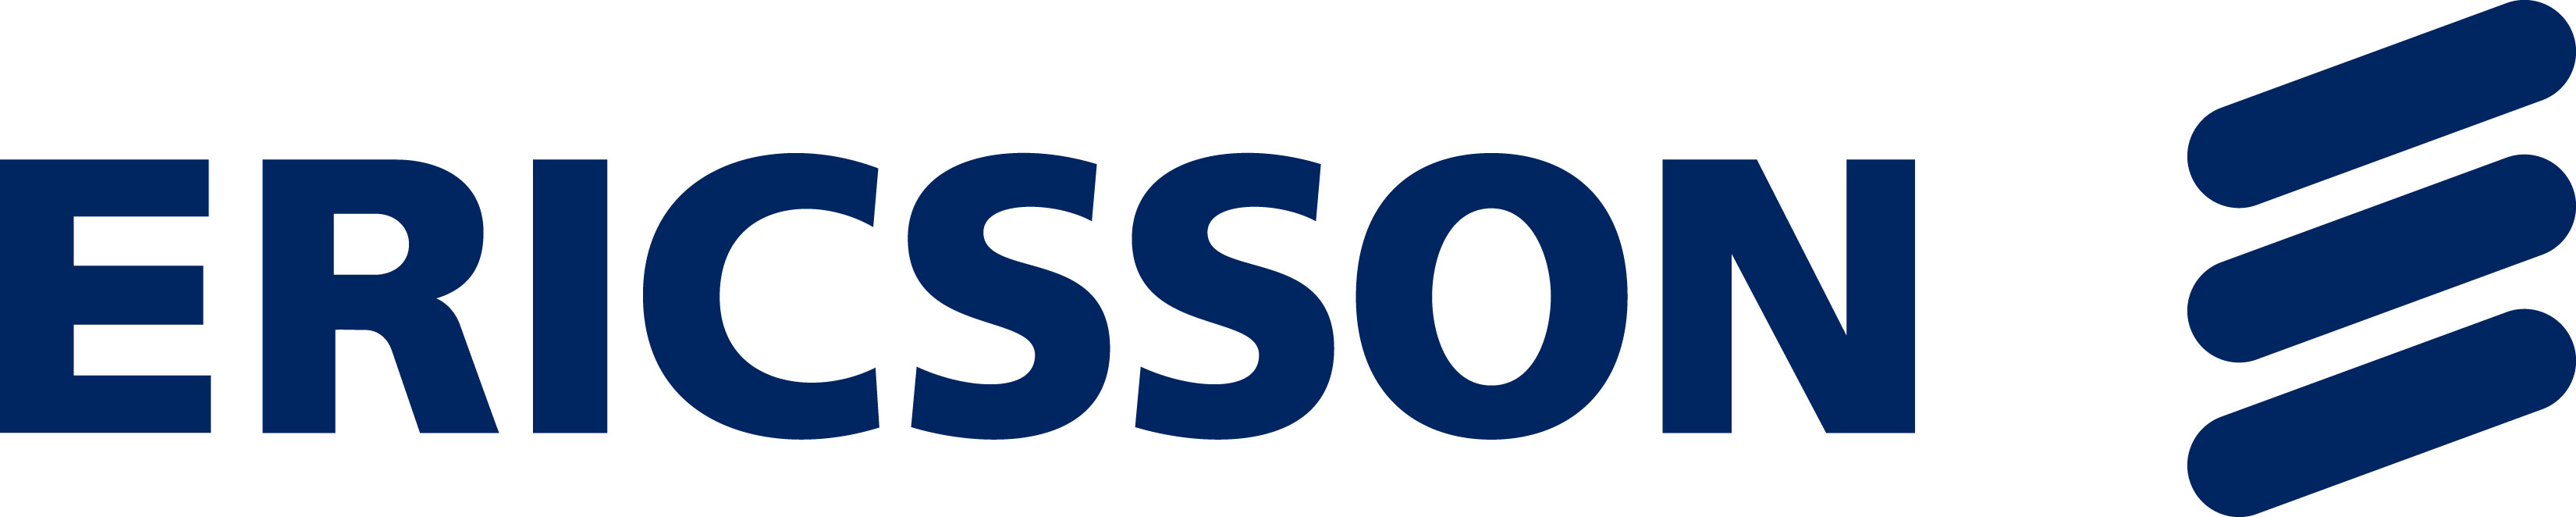 Ericsson - Headend video processing